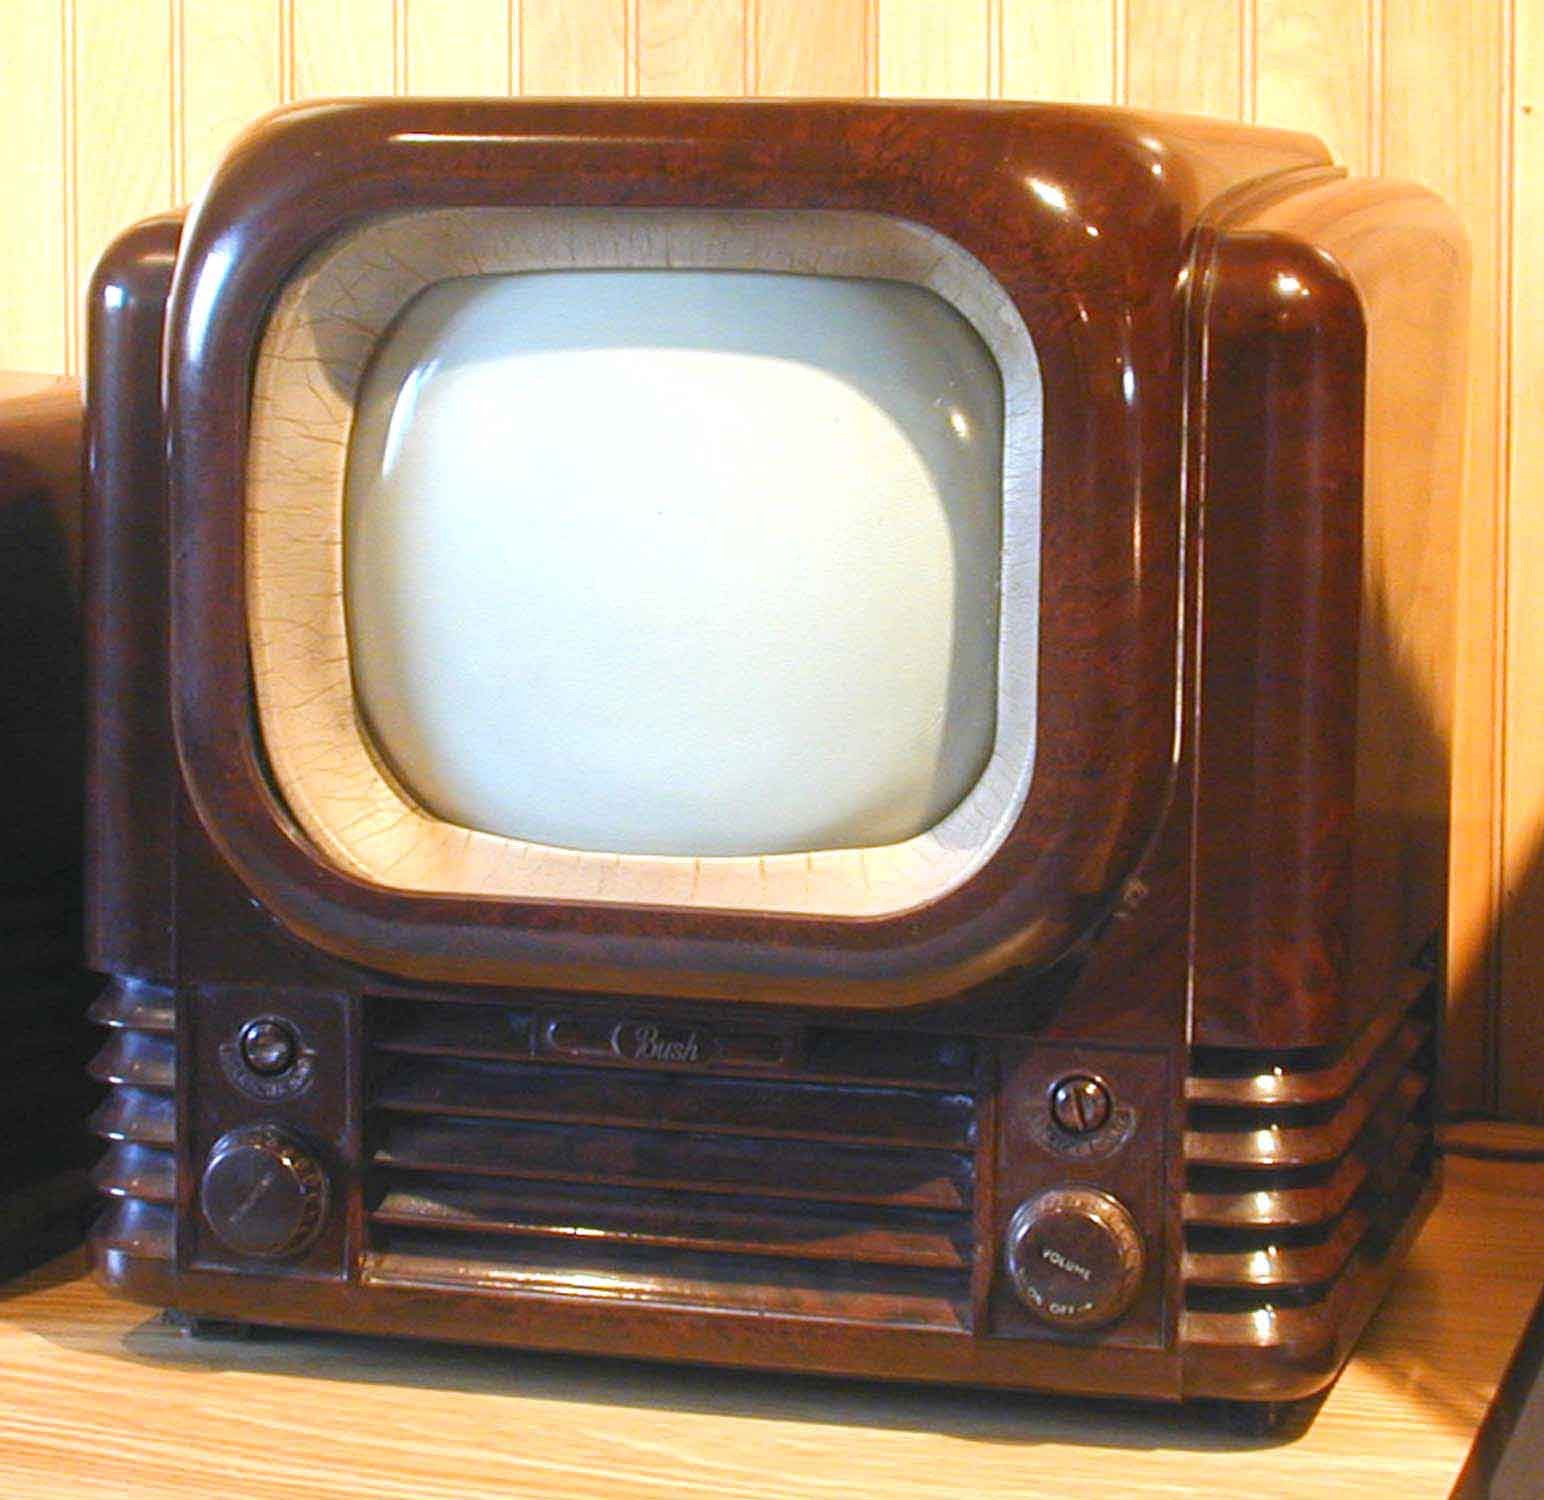 Old School TV television 296019 1544 1500